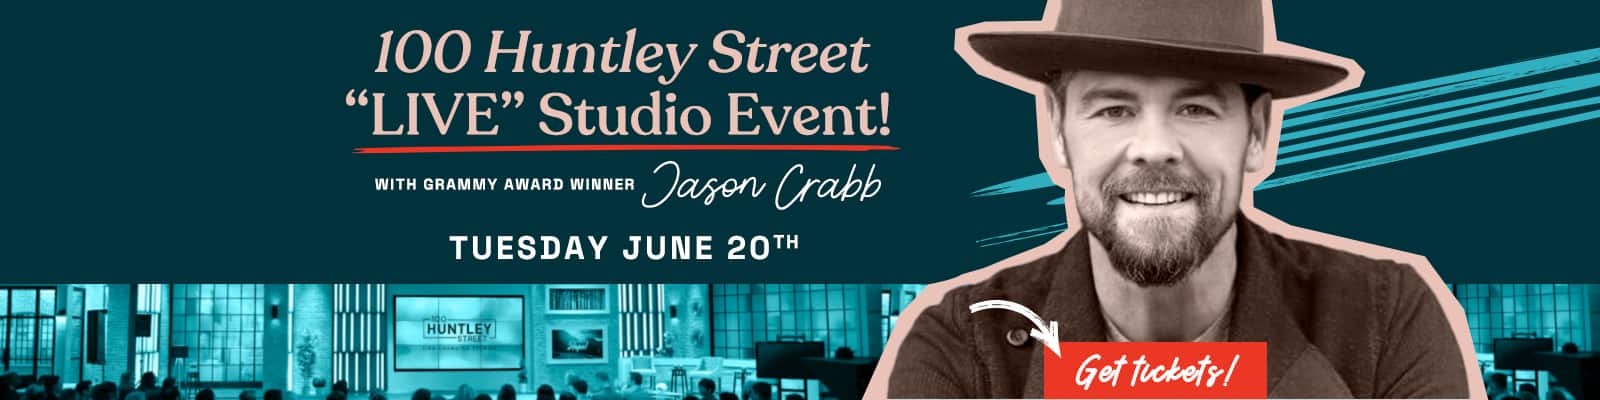 Live Studio Event with Jason Crabb